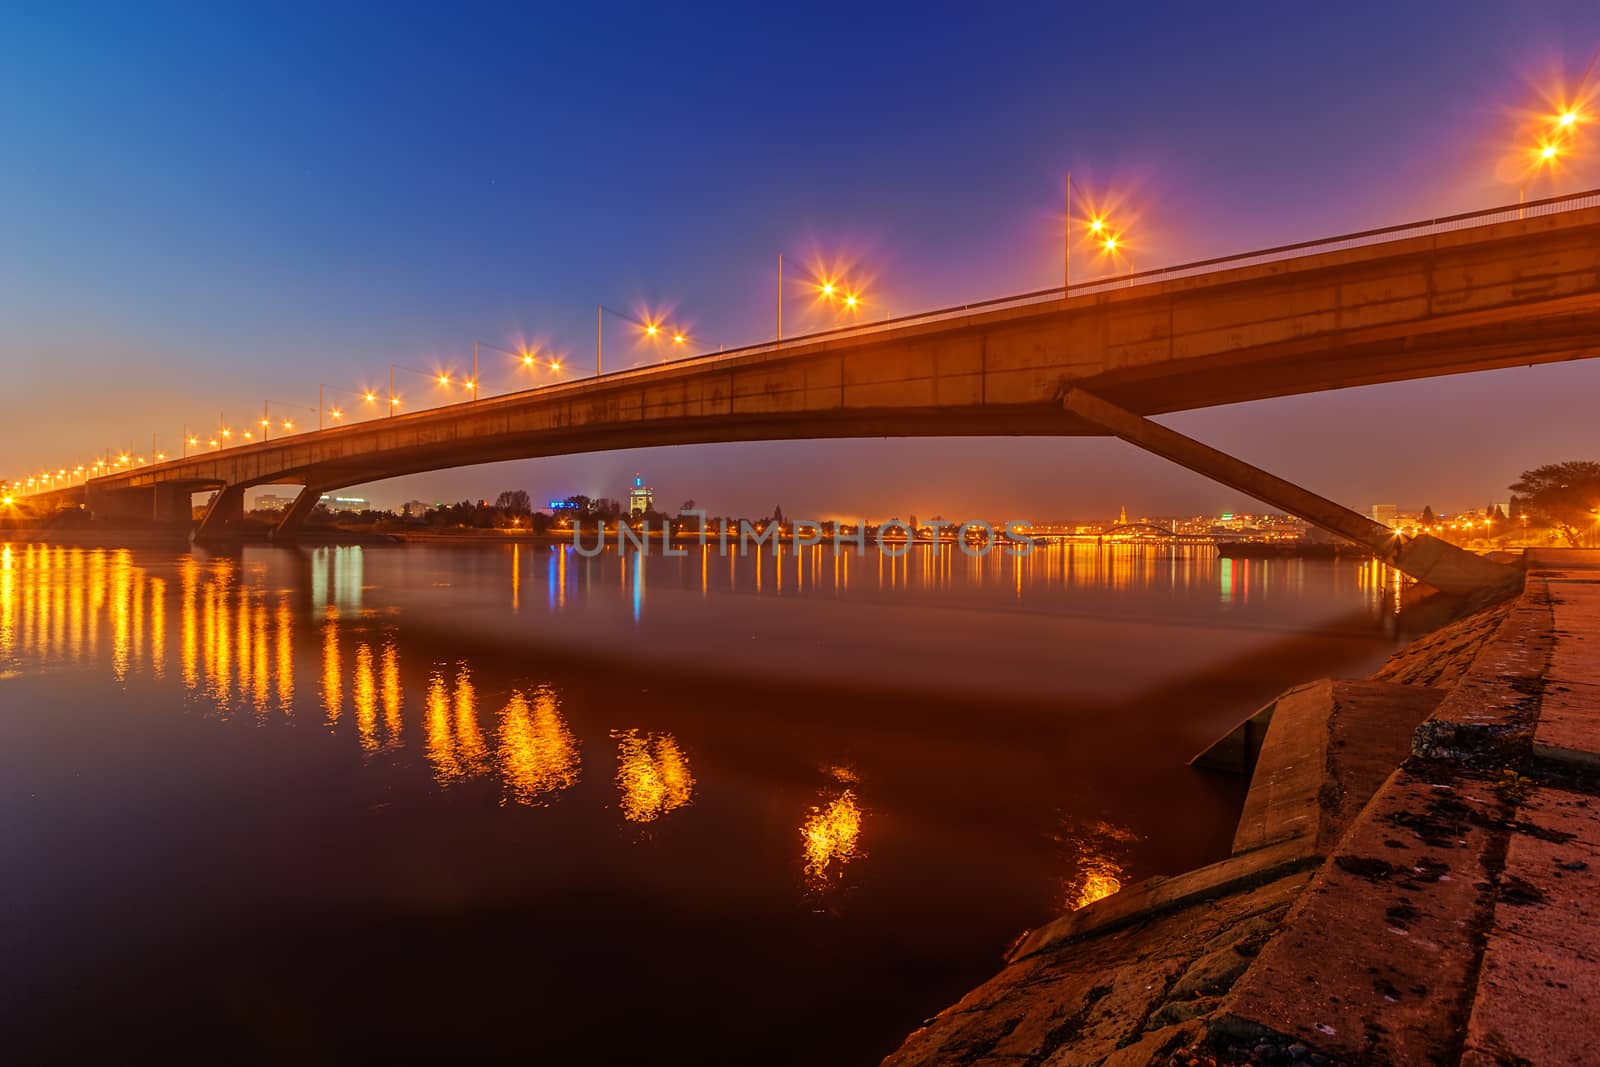 Bridge across river Sava at night with artificial lightning, Belgrade Serbia